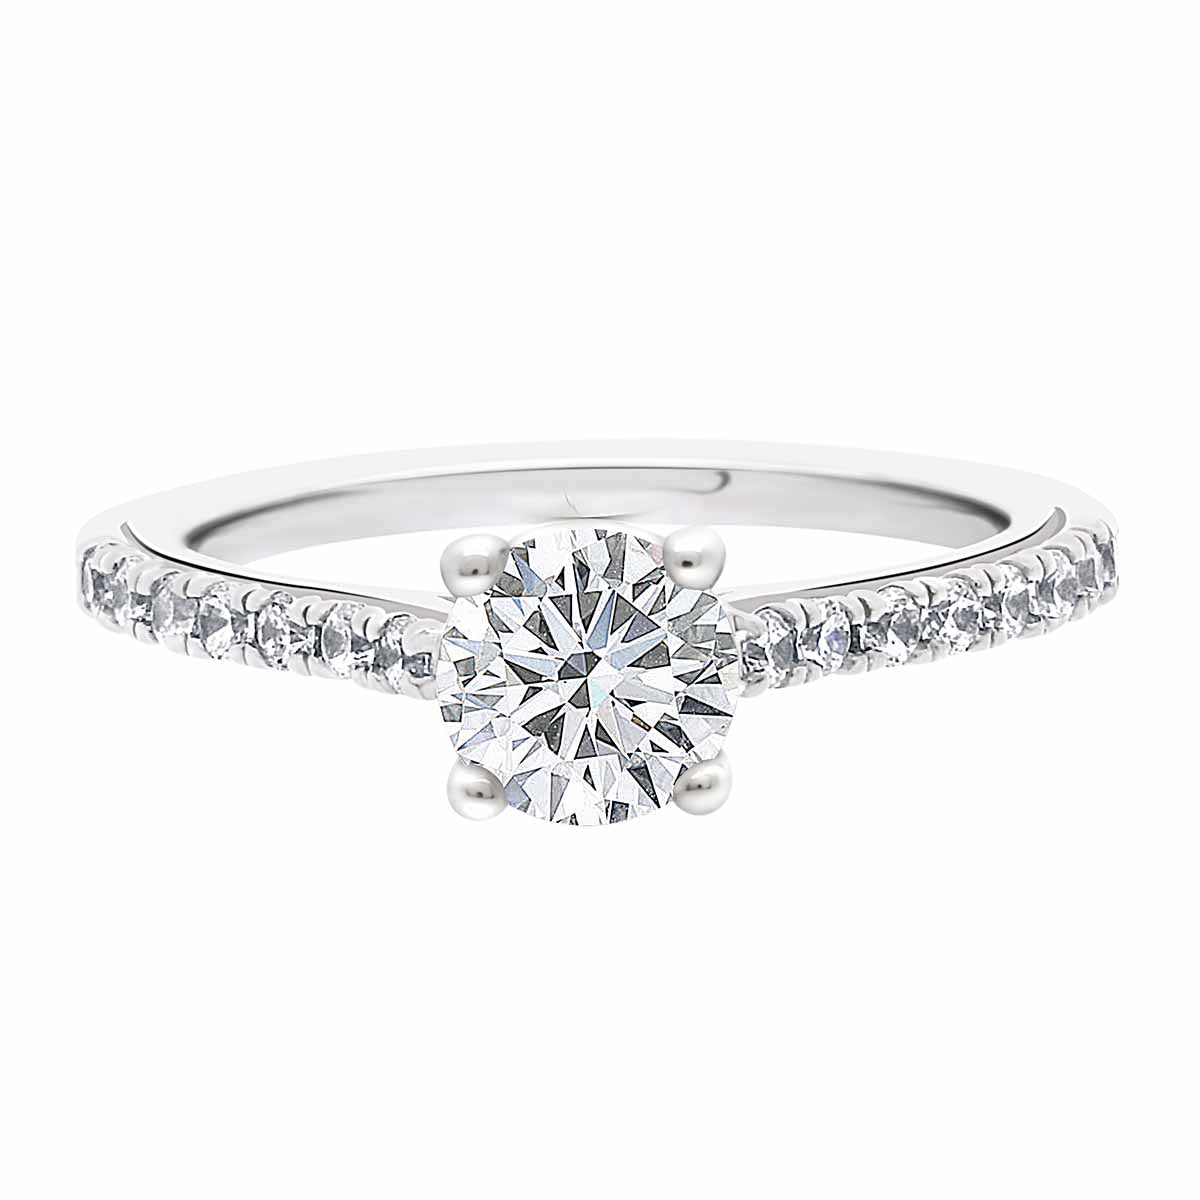 Castell Set Diamond Ring made from platinum